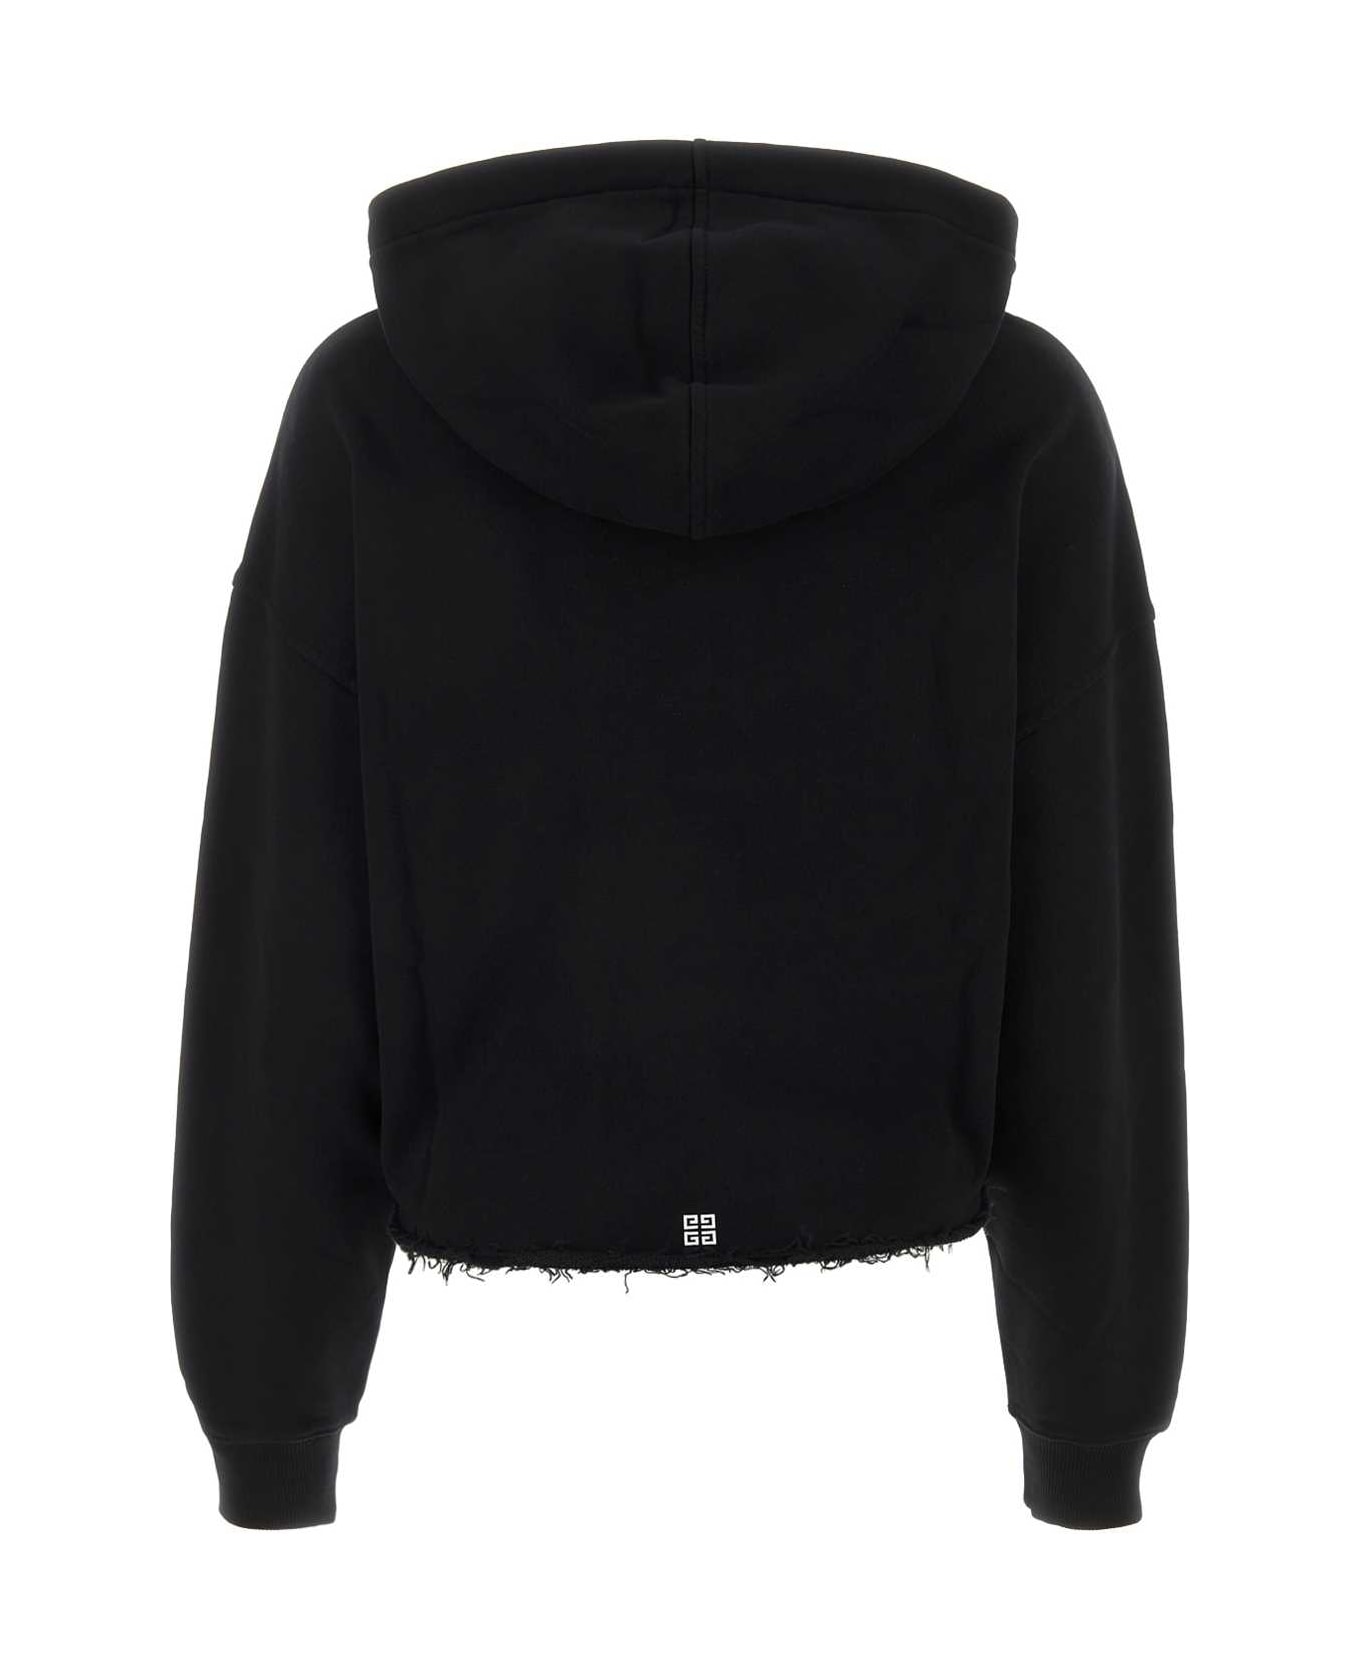 Givenchy Black Cotton Sweatshirt - 001